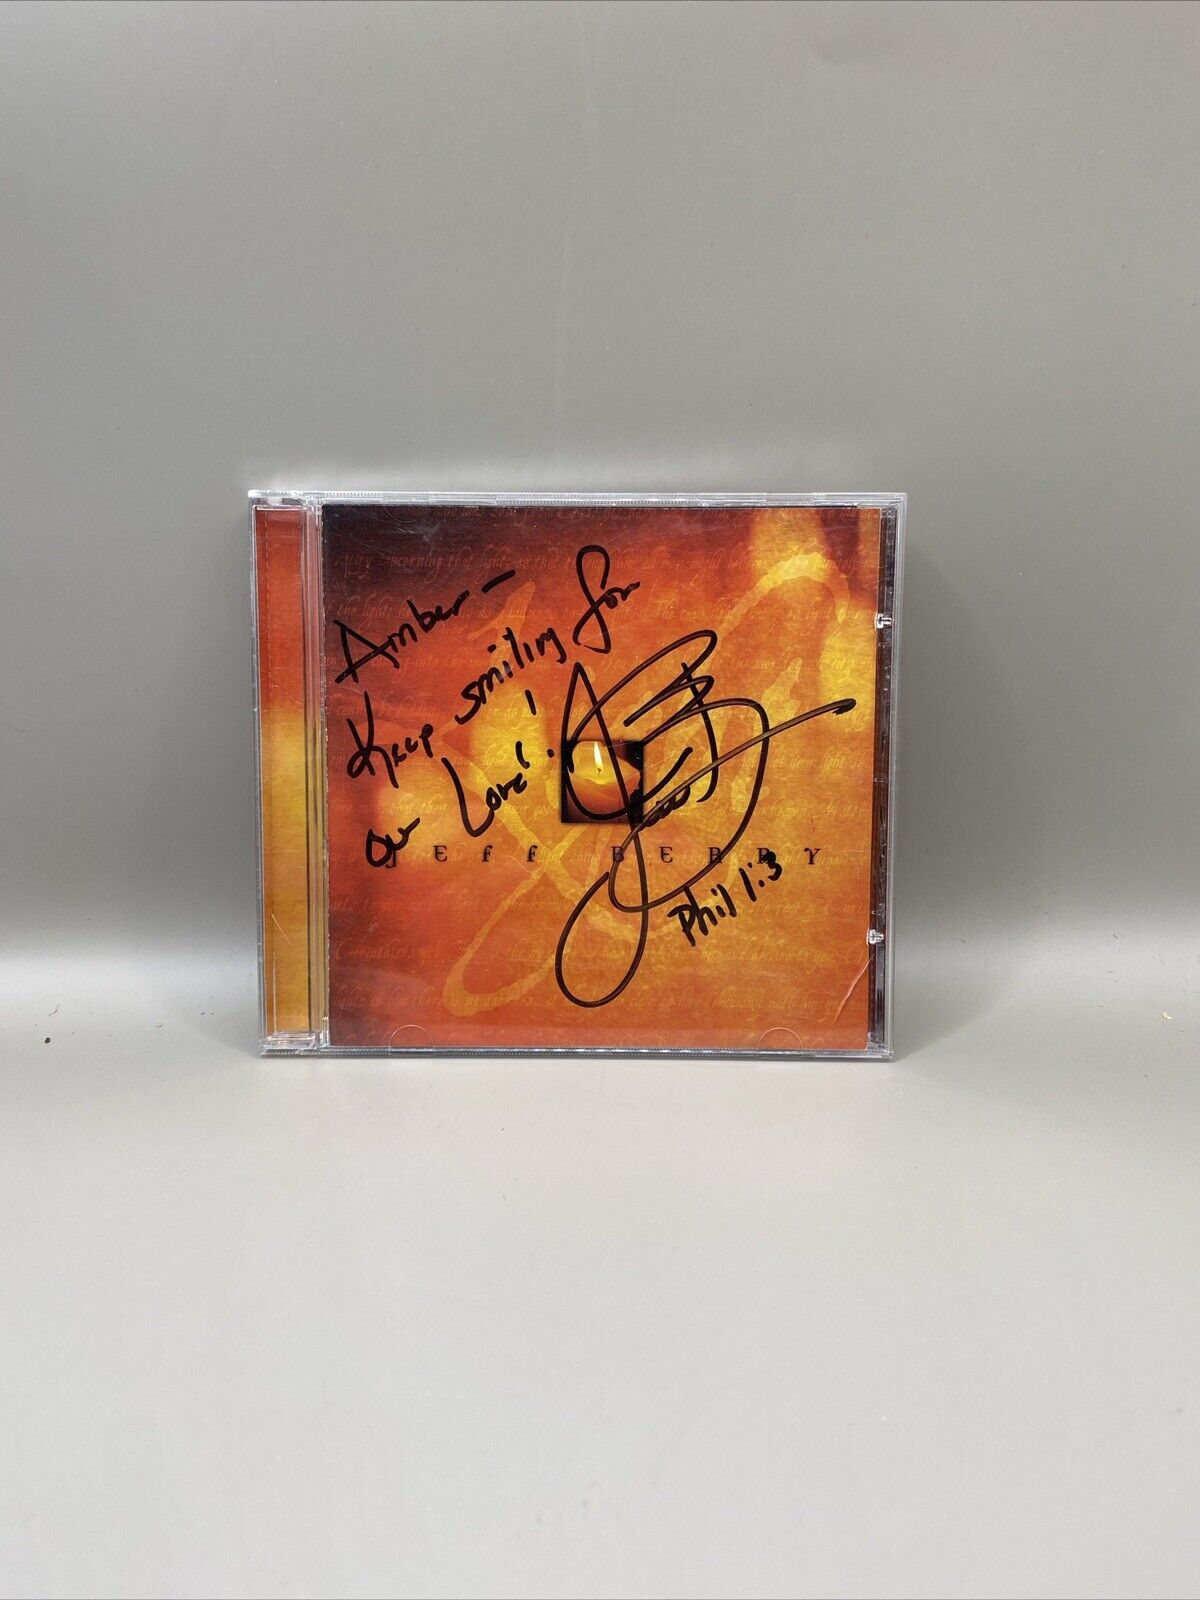 Jeff Berry - LIGHT [CD,2008] CHRISTIAN - Autographed